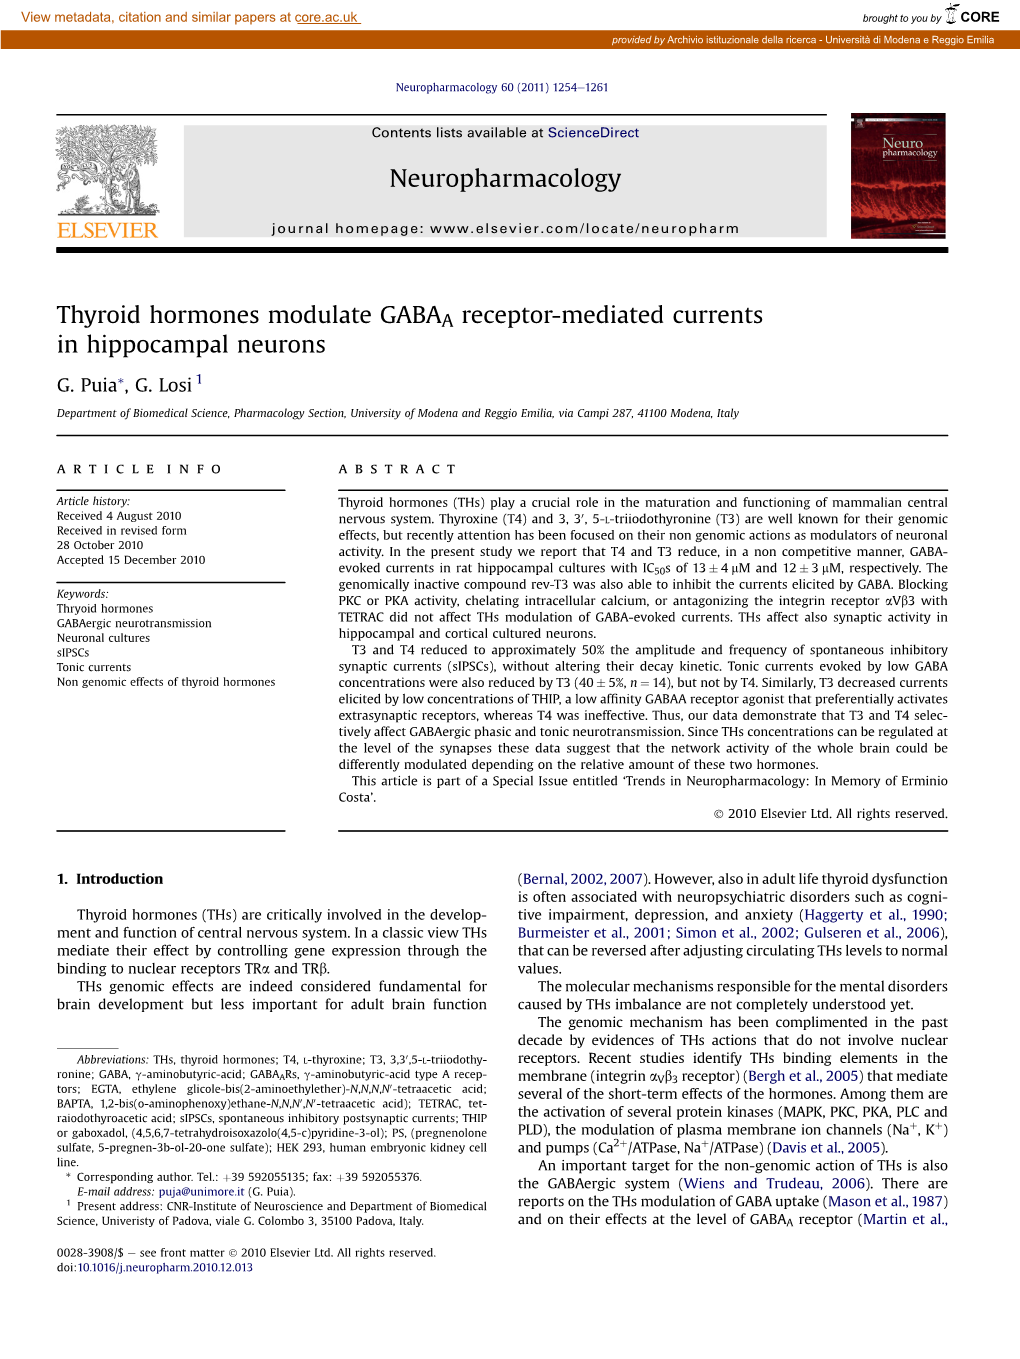 Thyroid Hormones Modulate GABAA Receptor-Mediated Currents in Hippocampal Neurons